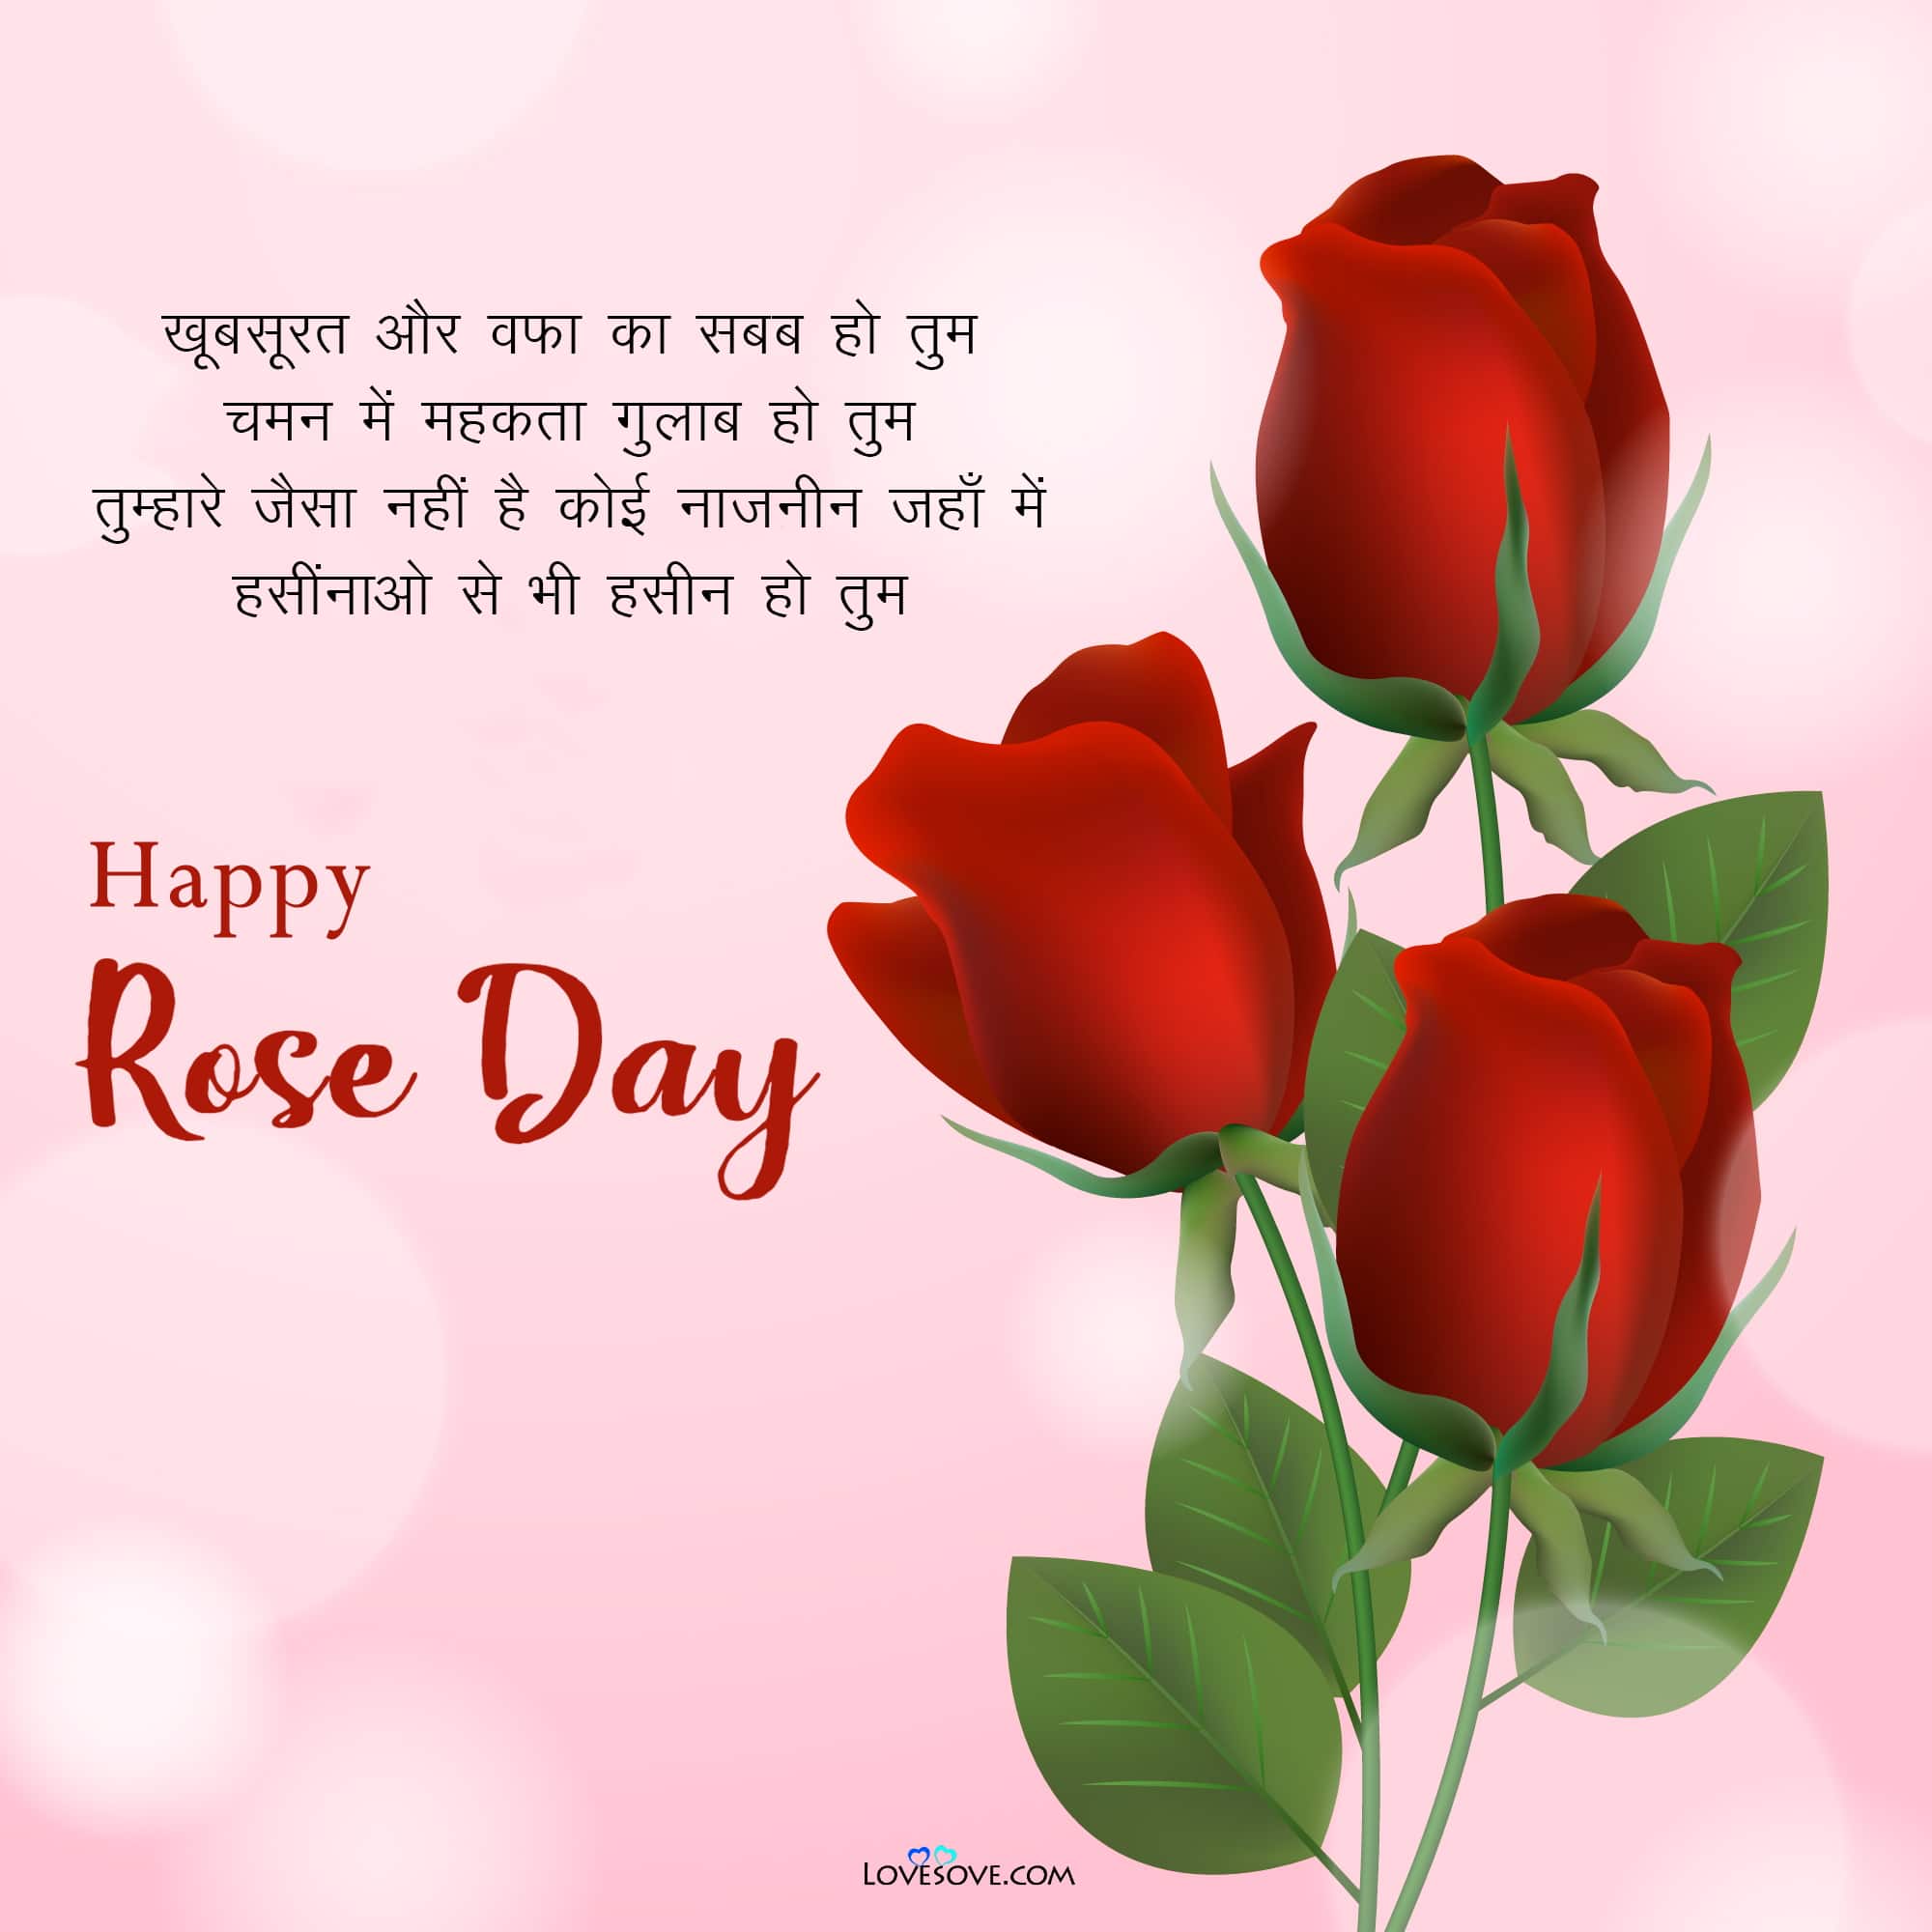 Rose Day wishes Hindi Lovesove 3, Valentine Week